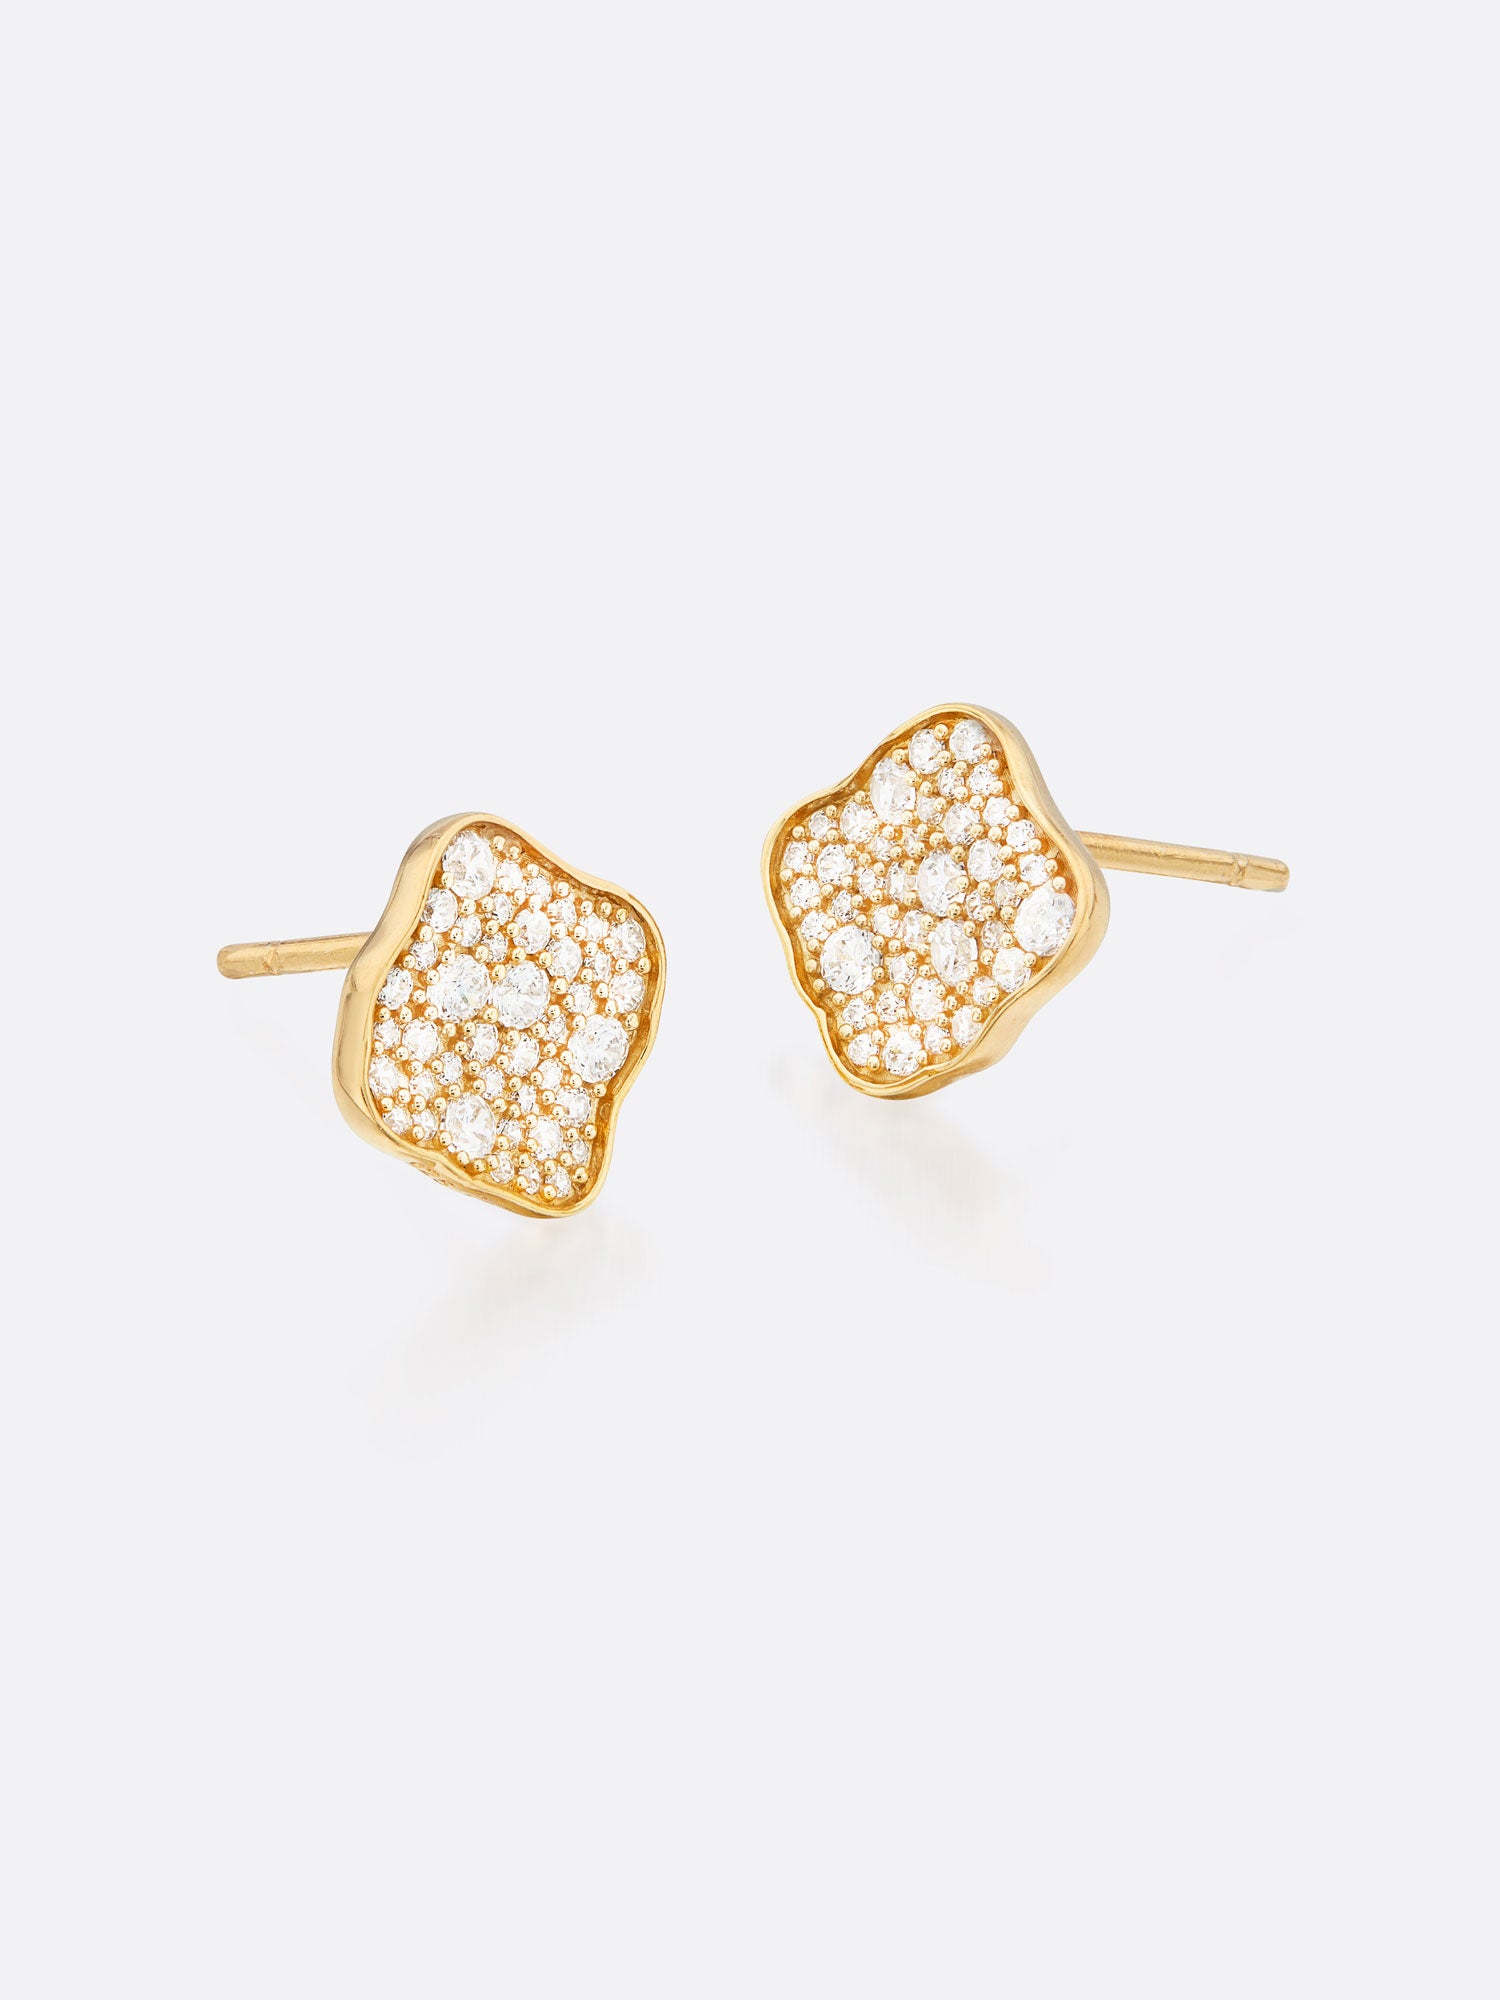 18k Yellow gold pavé diamond stud earrings side view